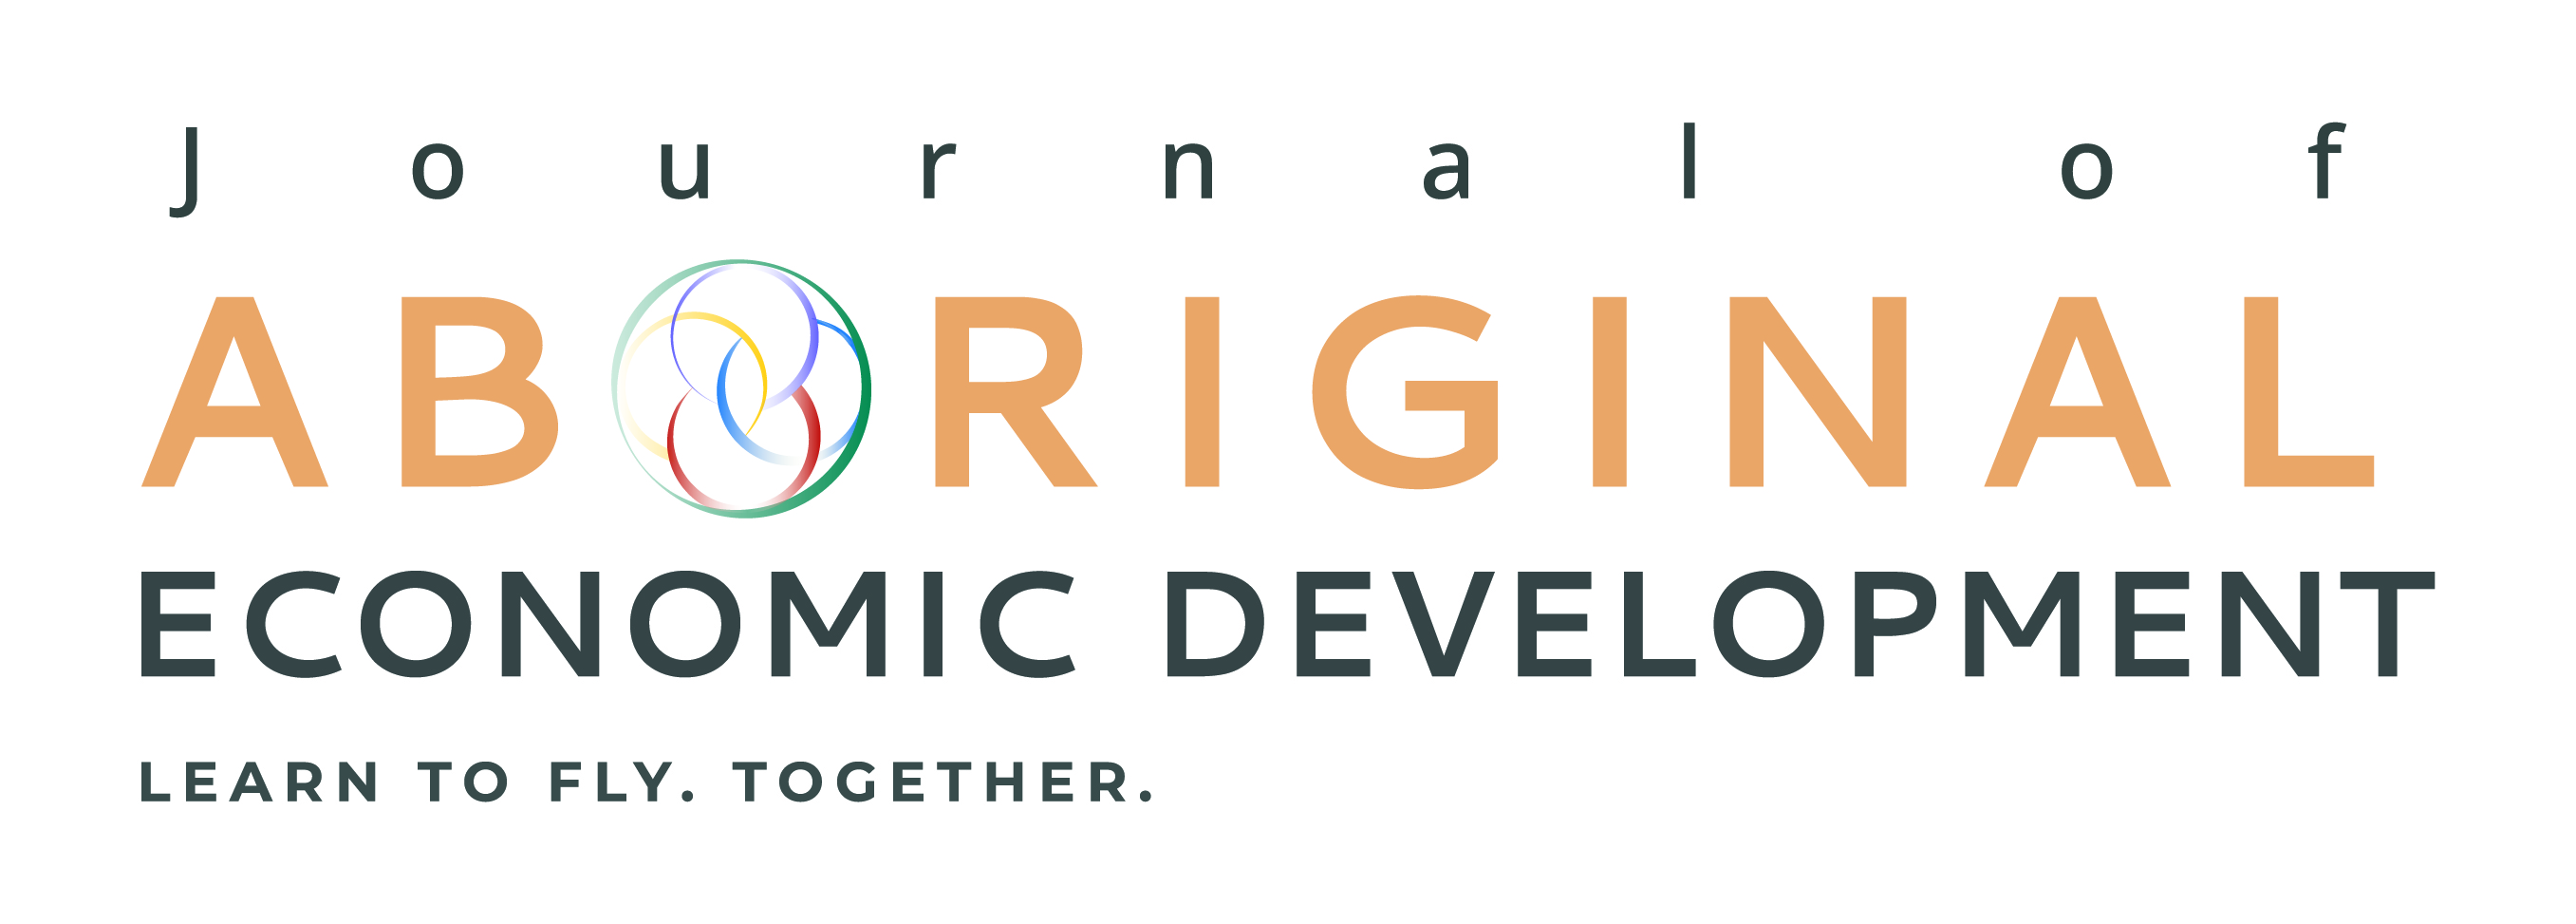 Journal of Aboriginal Economic Development.